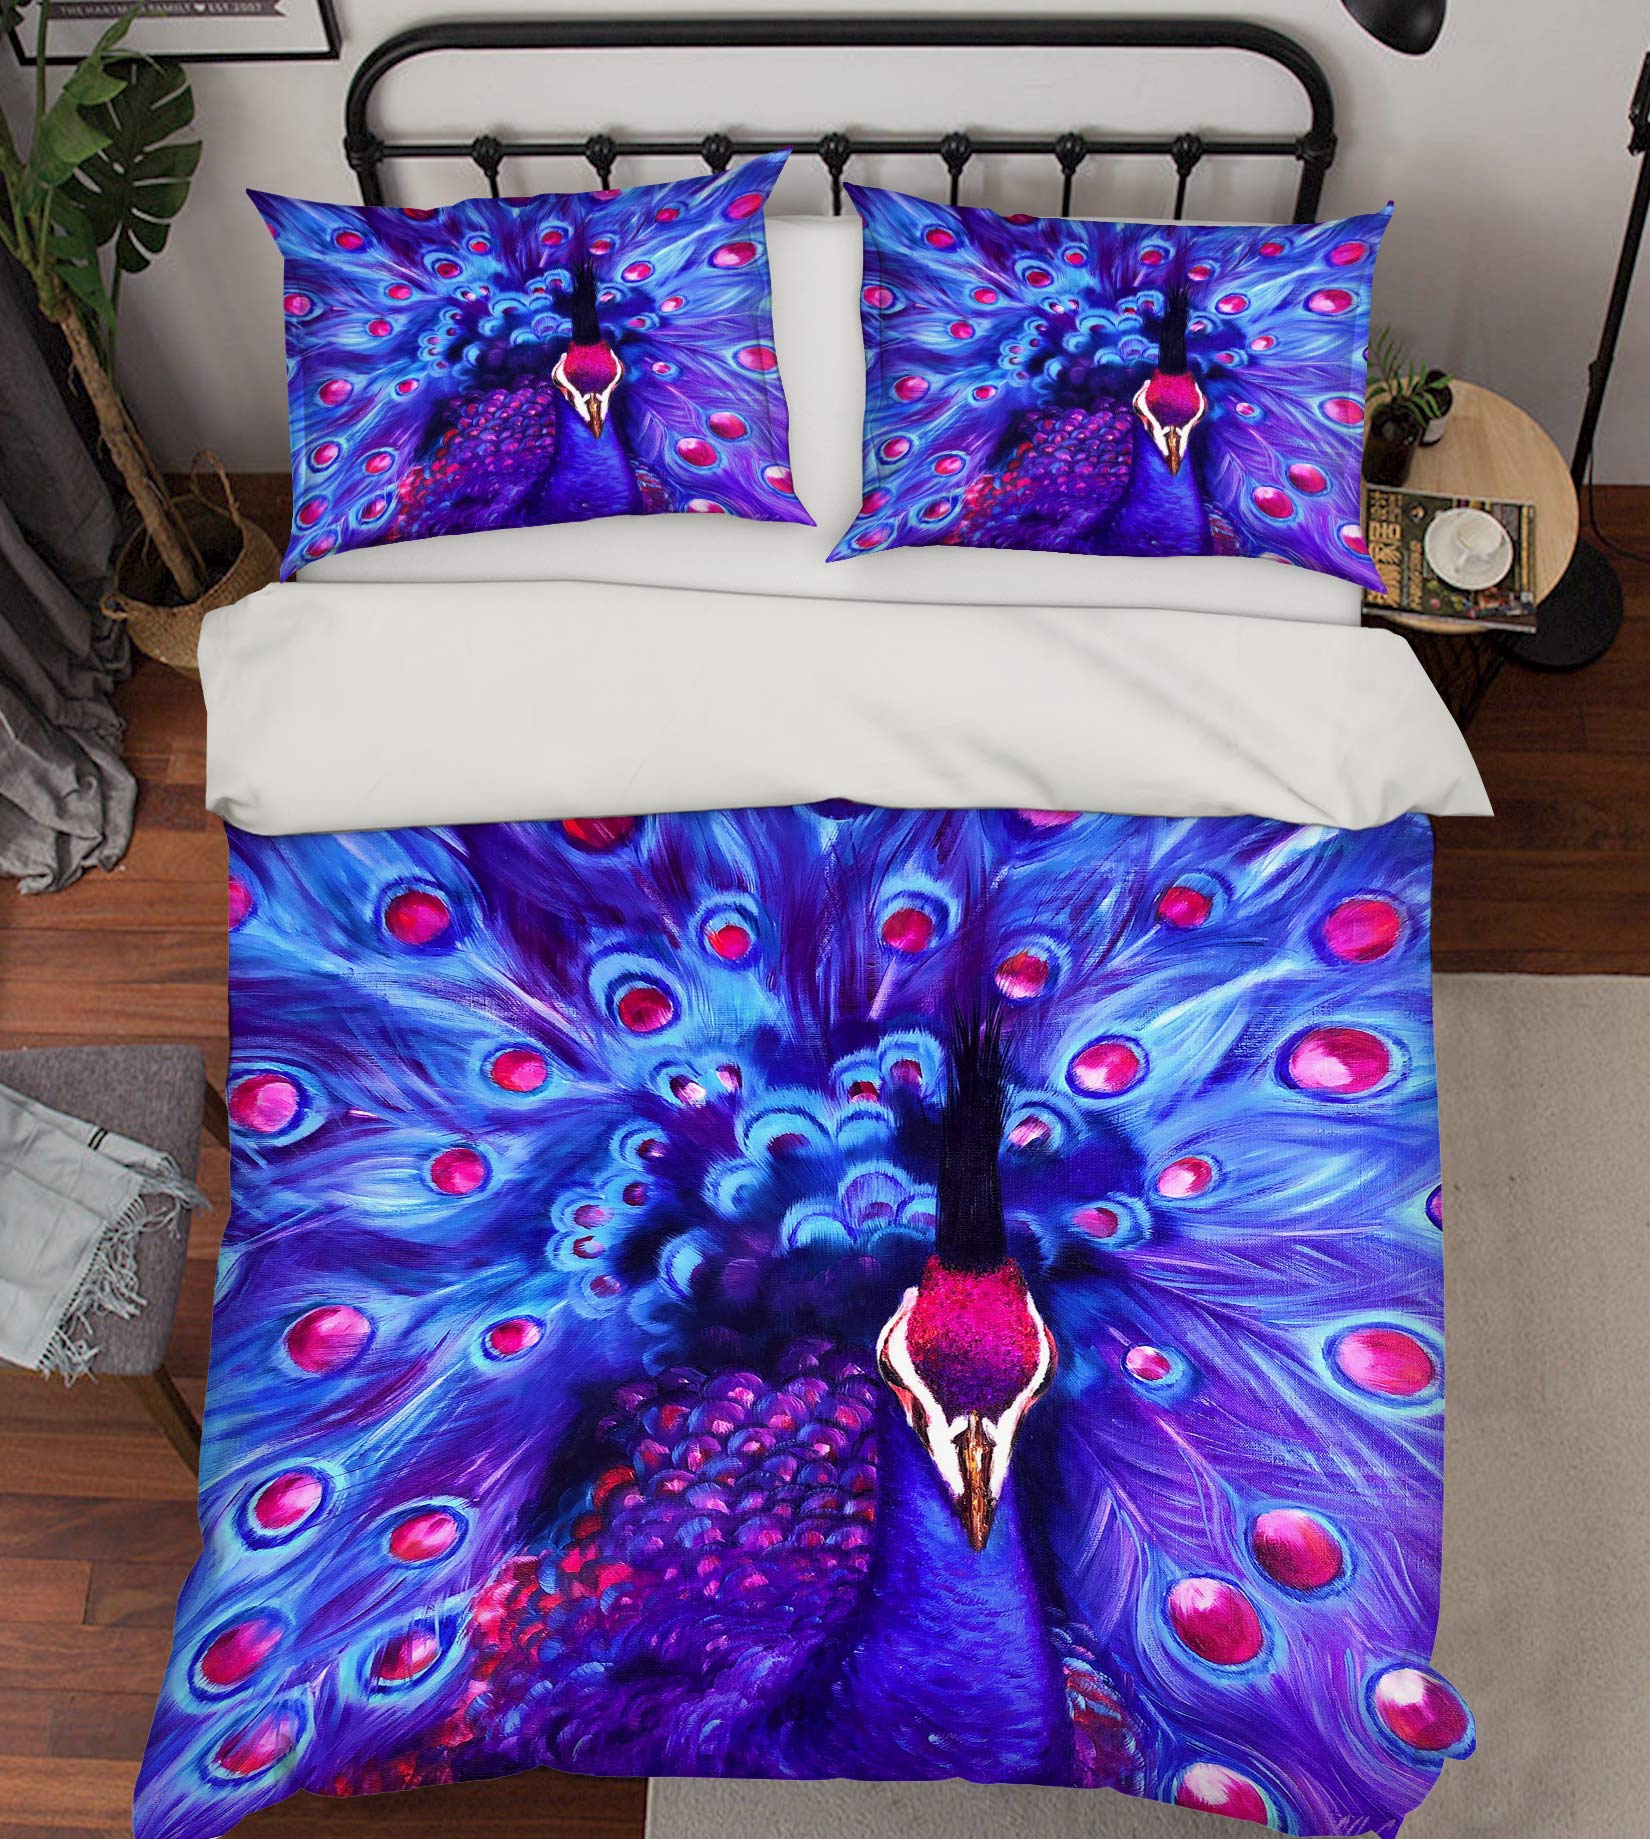 3D Purple Peacock 498 Skromova Marina Bedding Bed Pillowcases Quilt